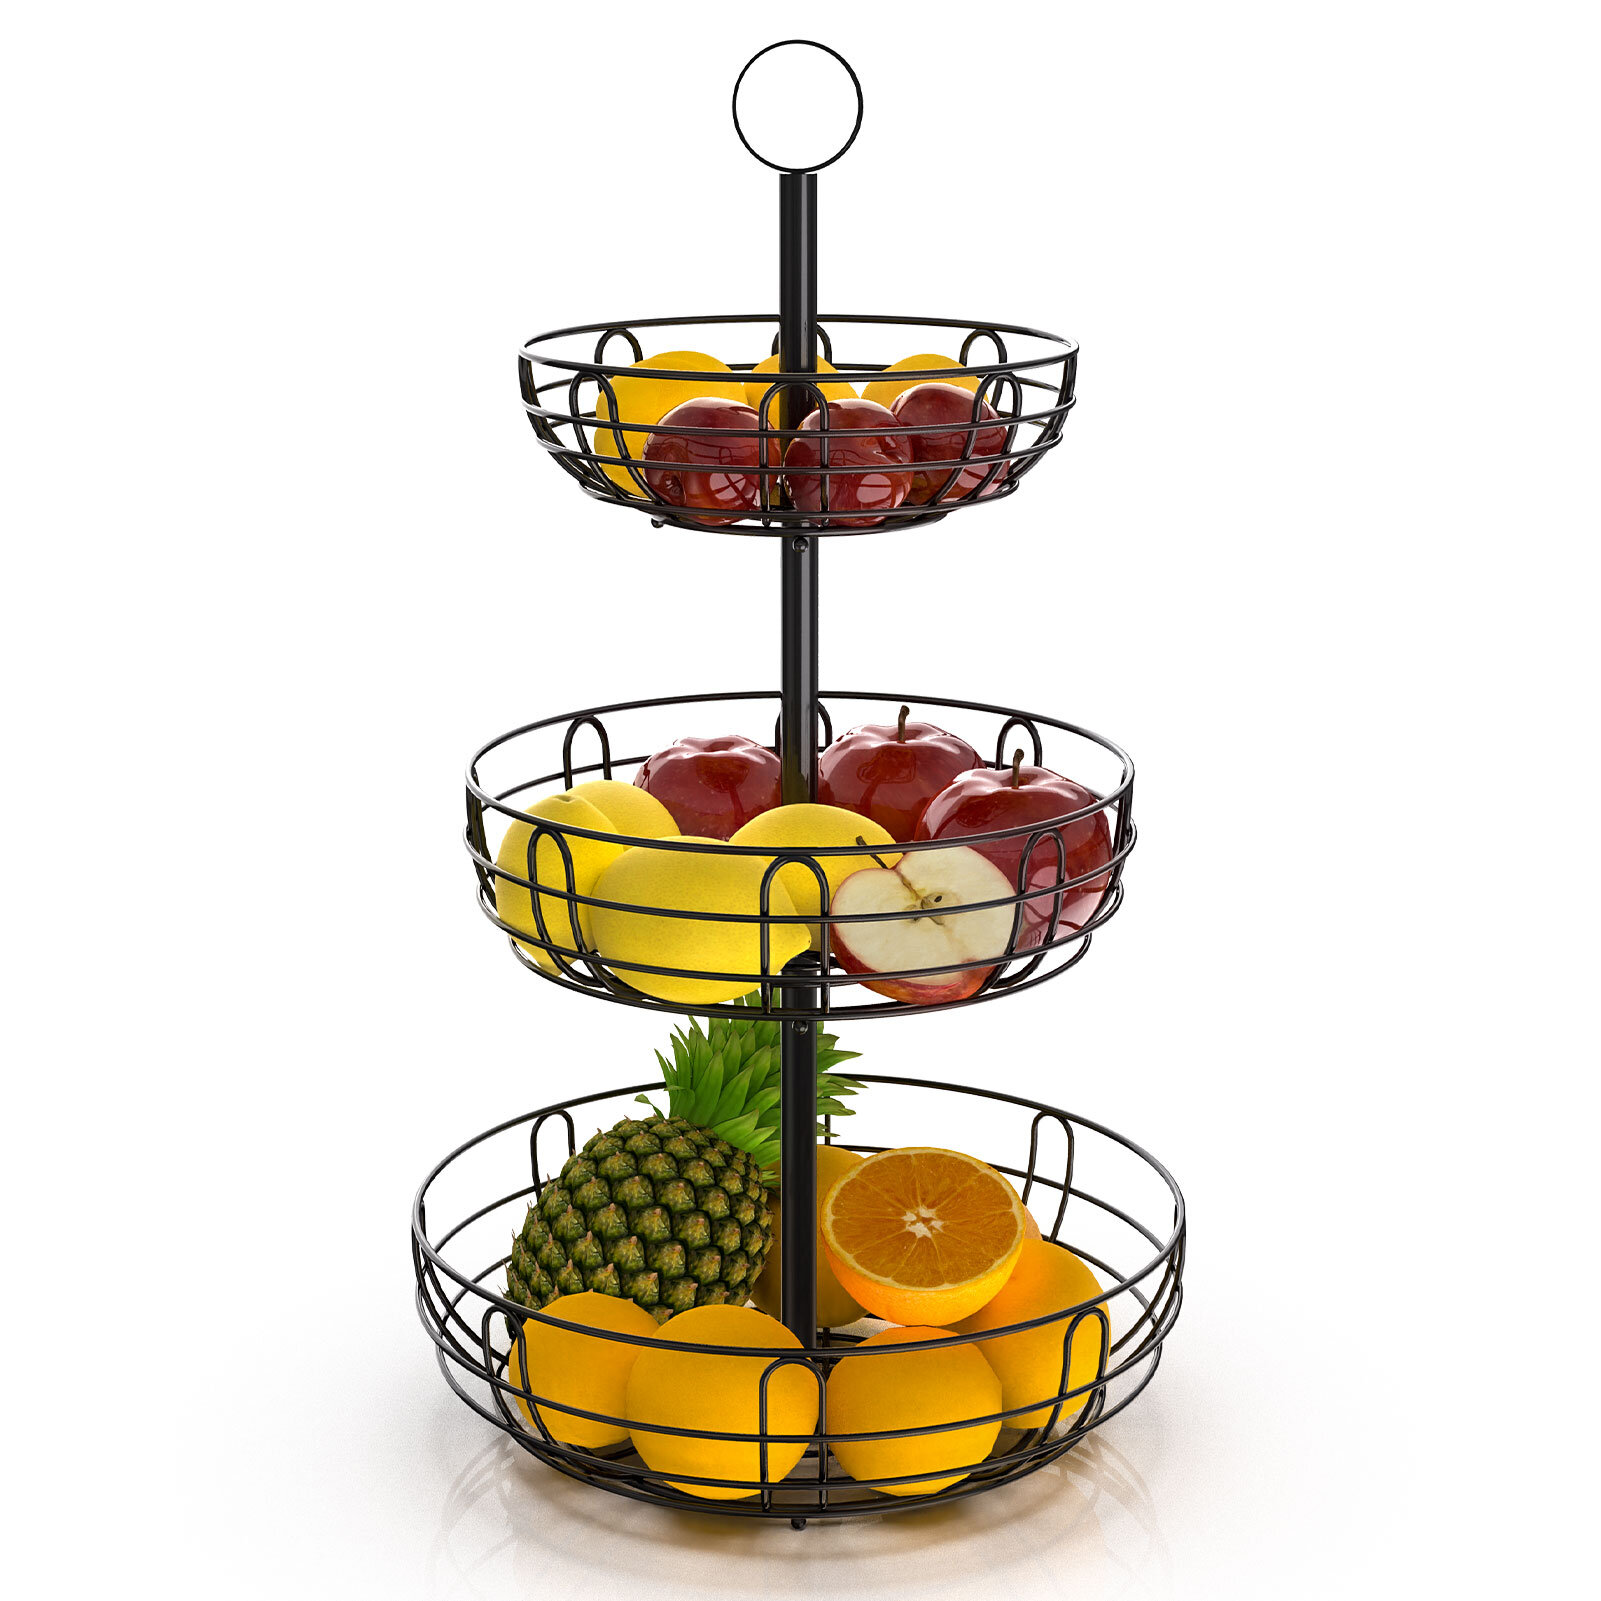 Per 3-Tier Iron Fruit Basket Hanging Fruits Bowl Vegetables Snack Kitchen Storage Holder Tray 